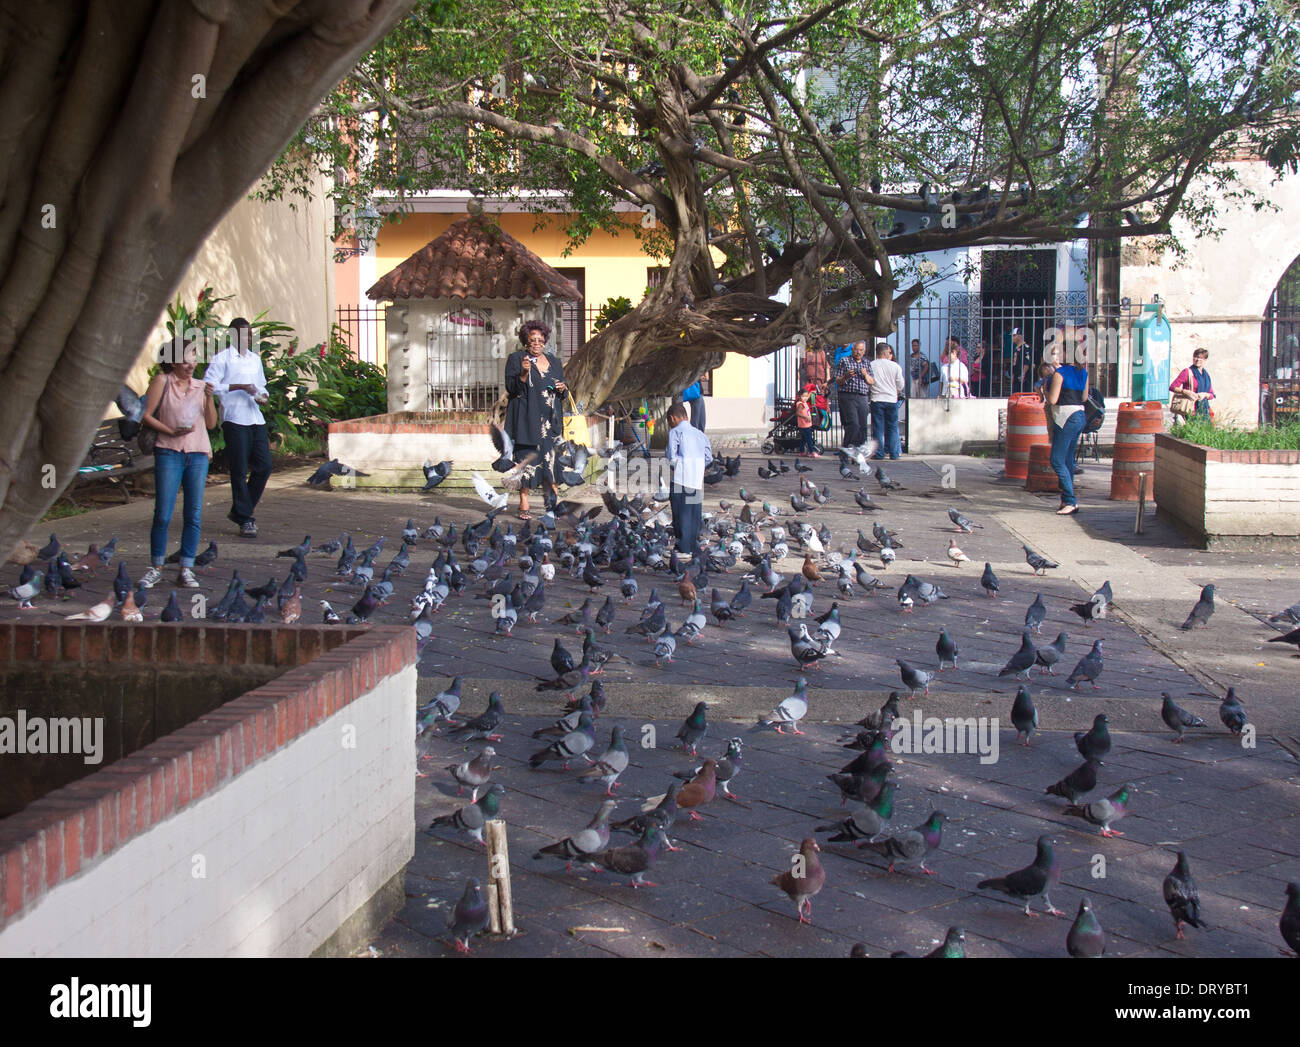 People and pigeons in Parque de las Palomas in Old San Juan, Puerto Rico Stock Photo